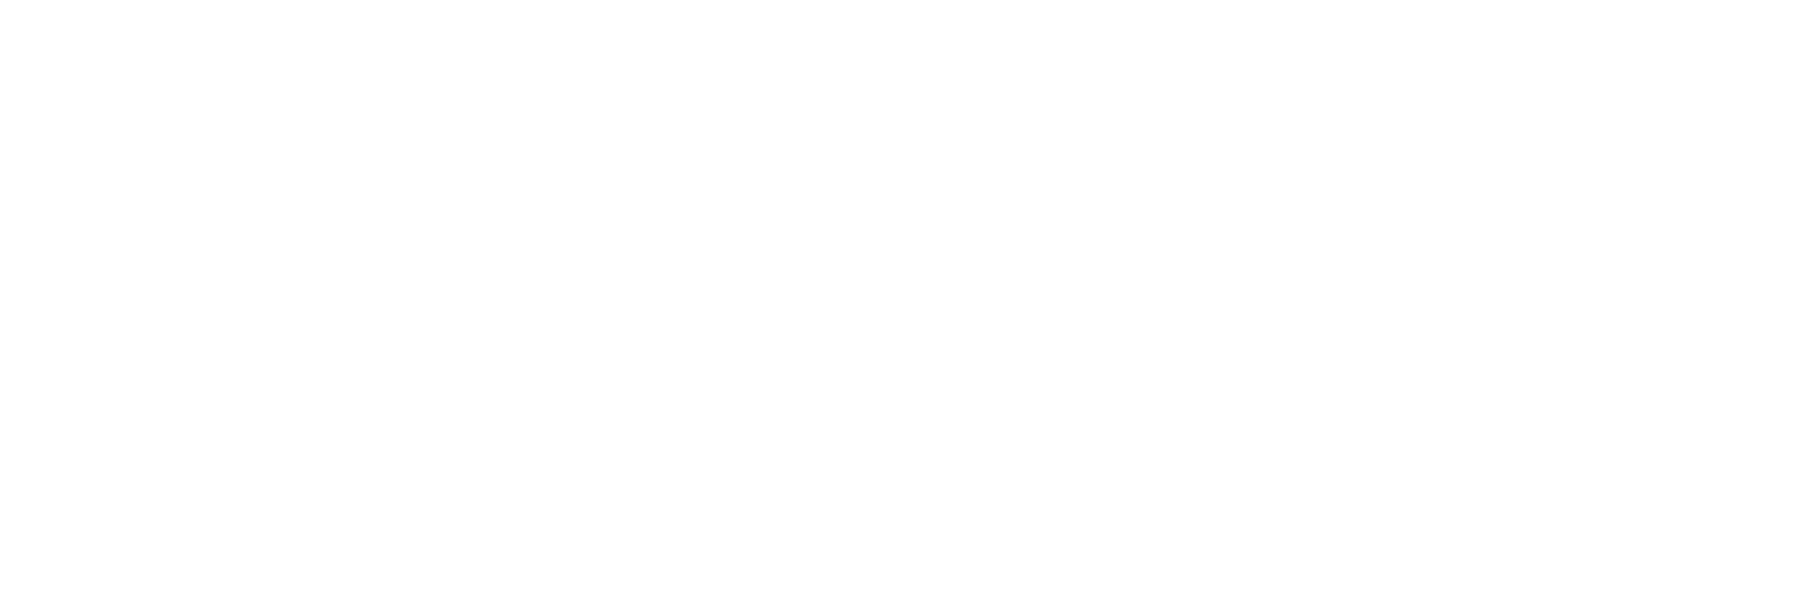 Denver Relocation Guide Logo WHITE